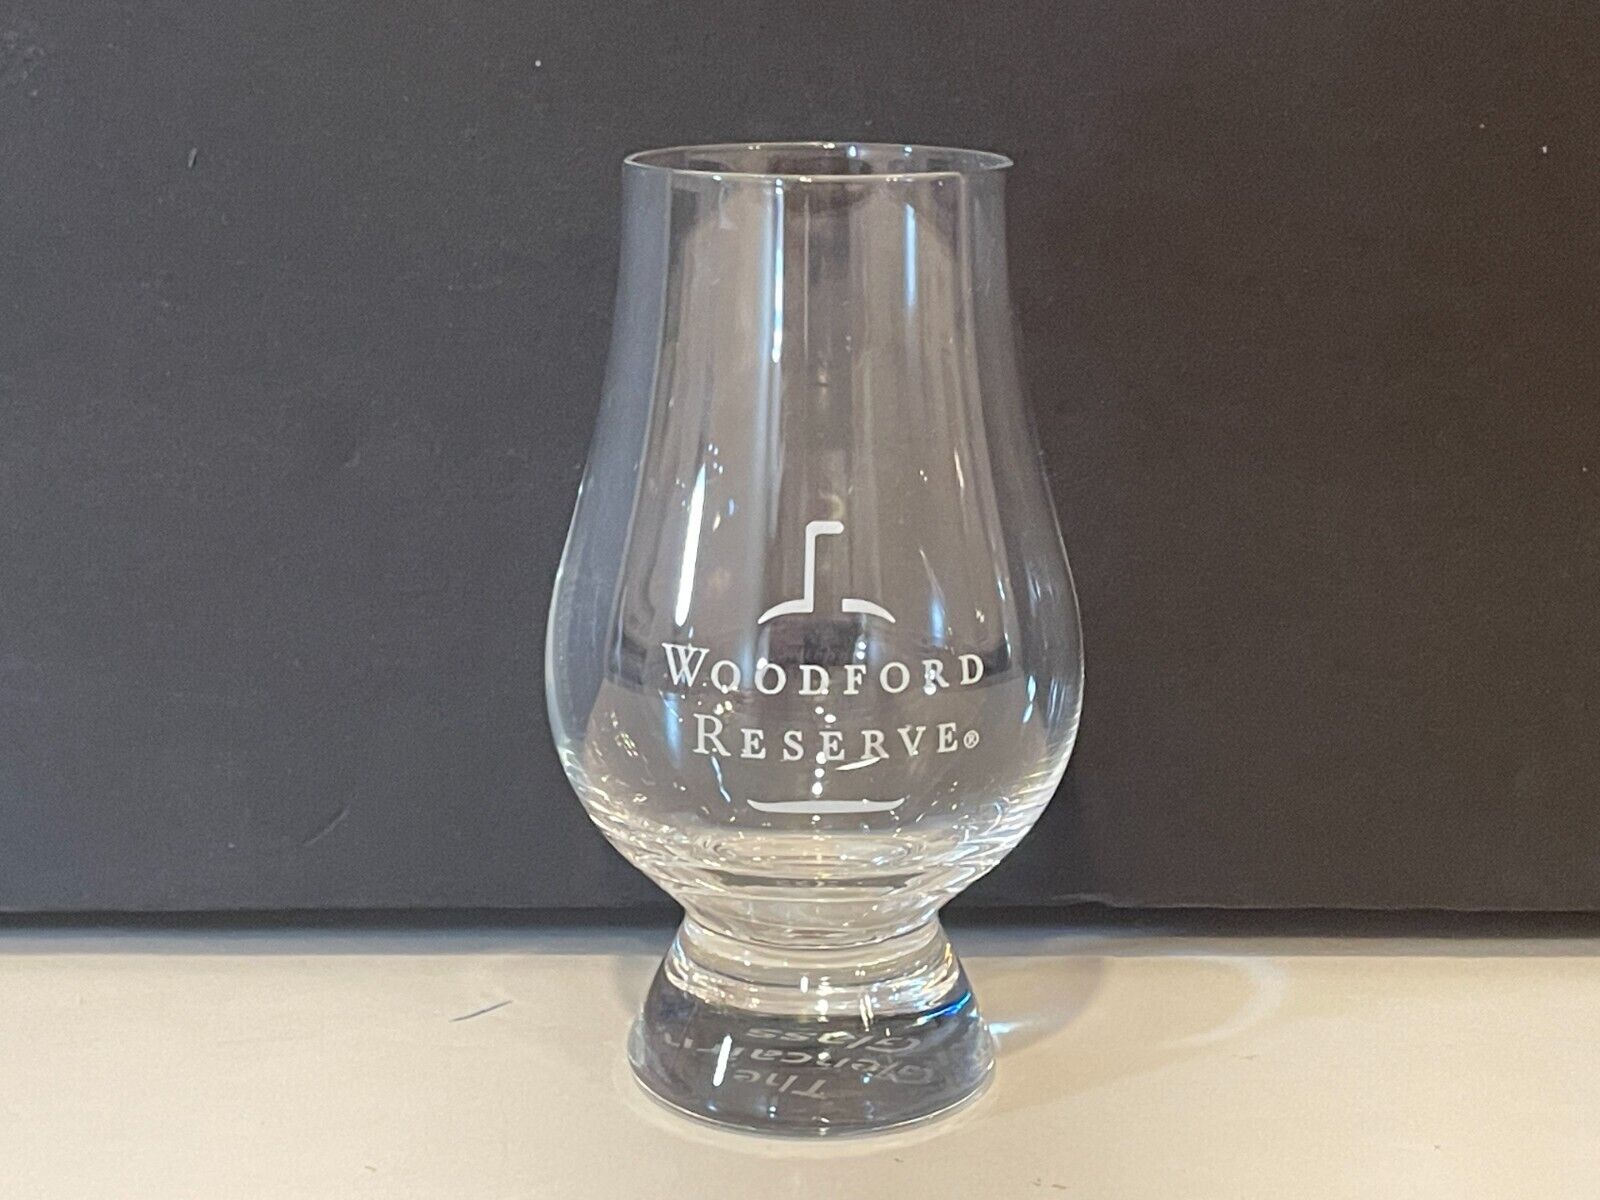 Woodford Reserve Etched Bourbon Whiskey Glencairn Taster Glass